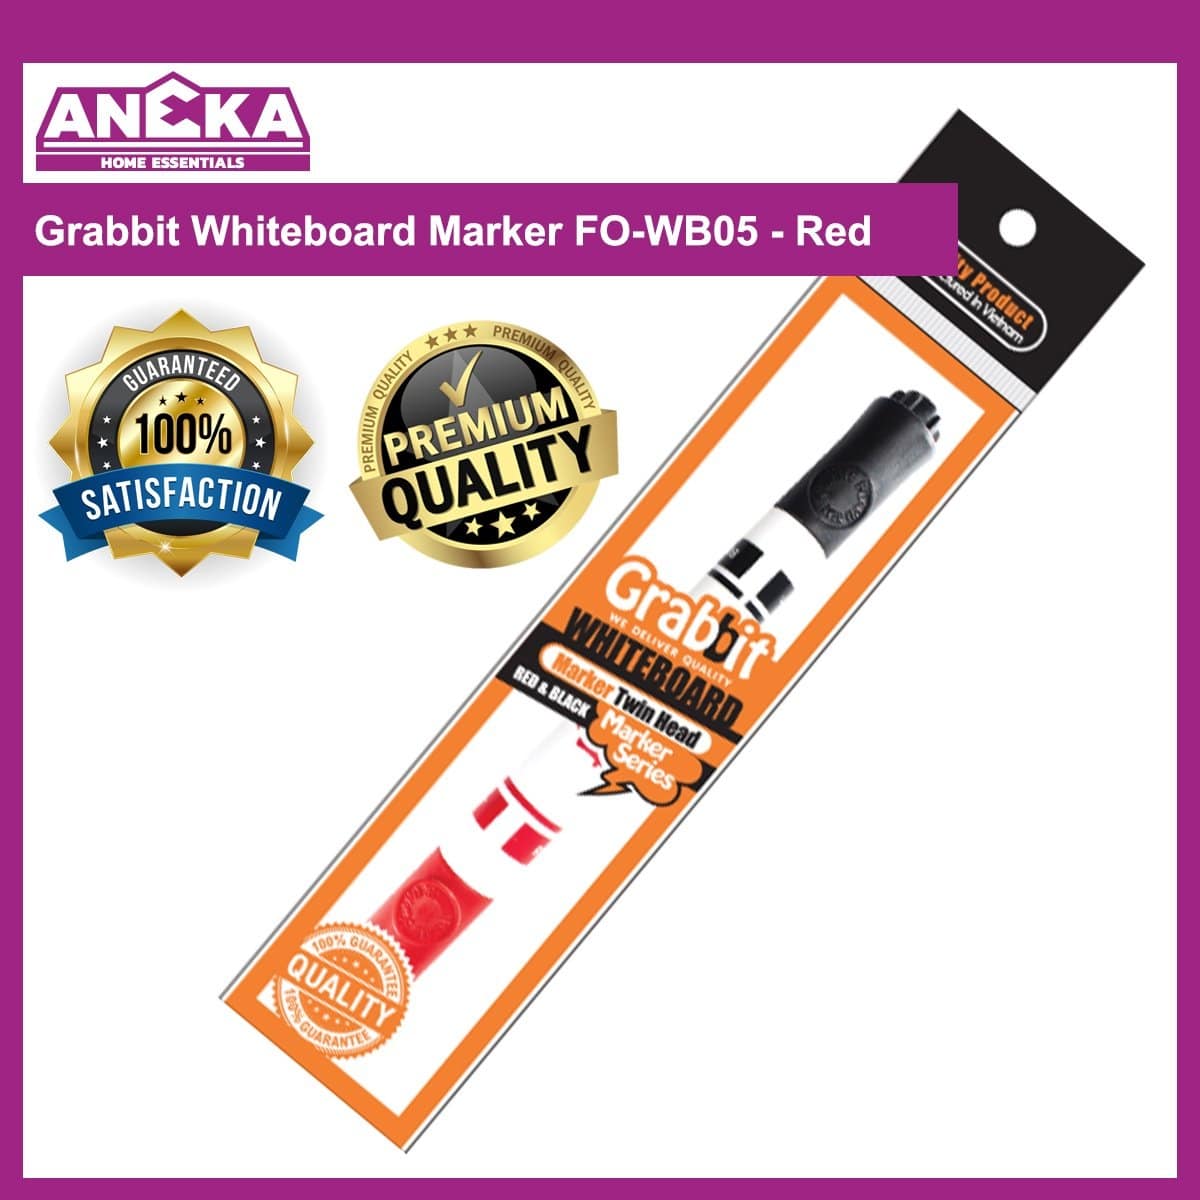 Grabbit Whiteboard Marker FO-WB05 - Red